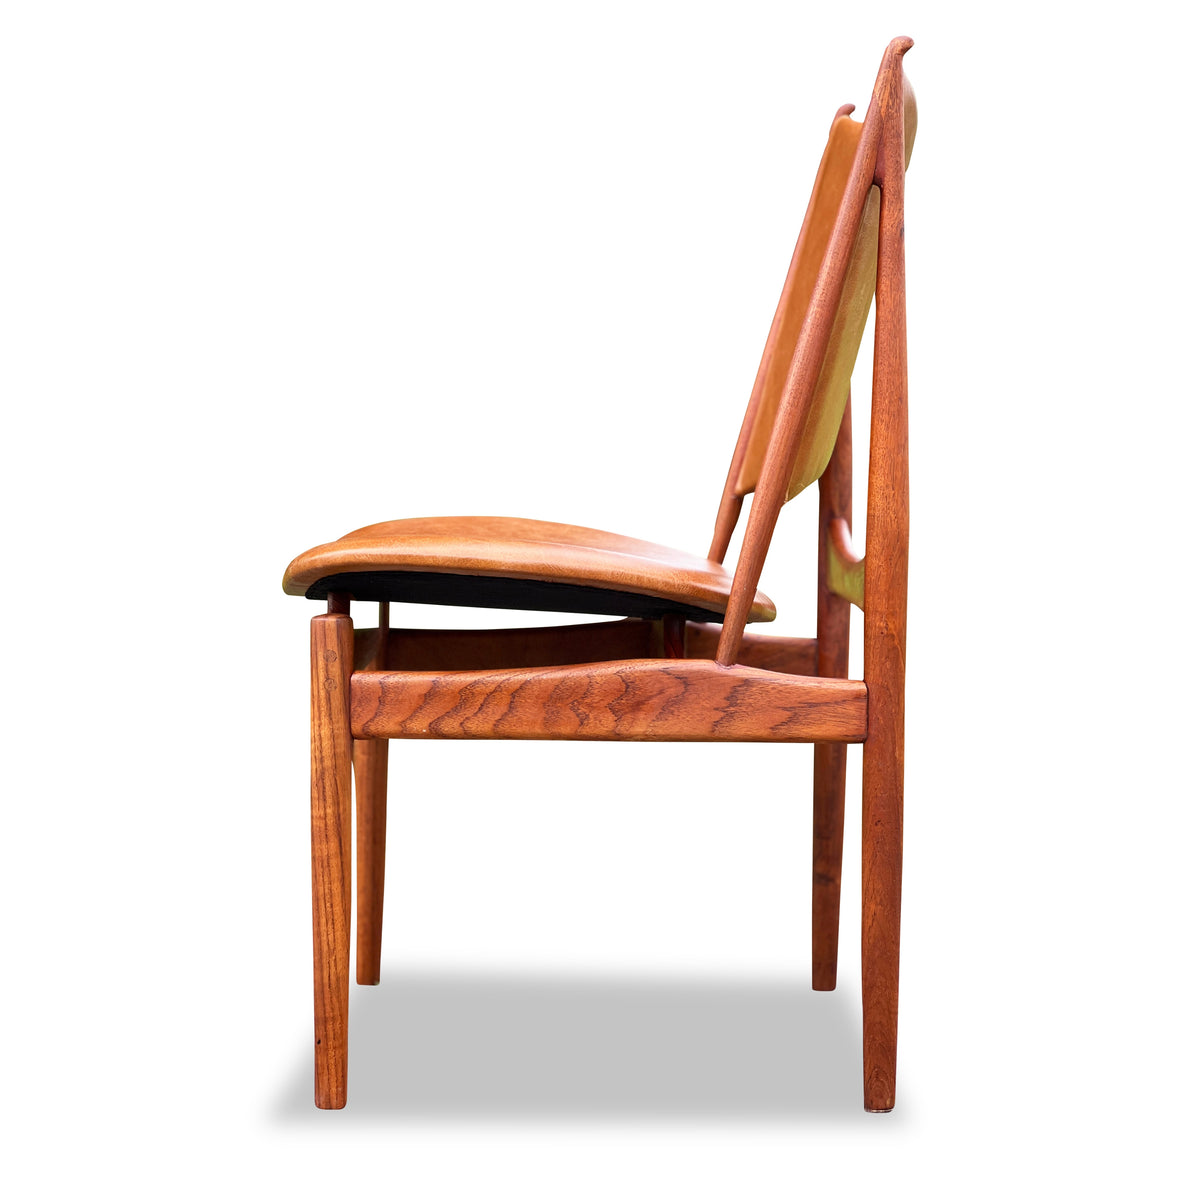 The Egyptian Chair by Finn Juhl